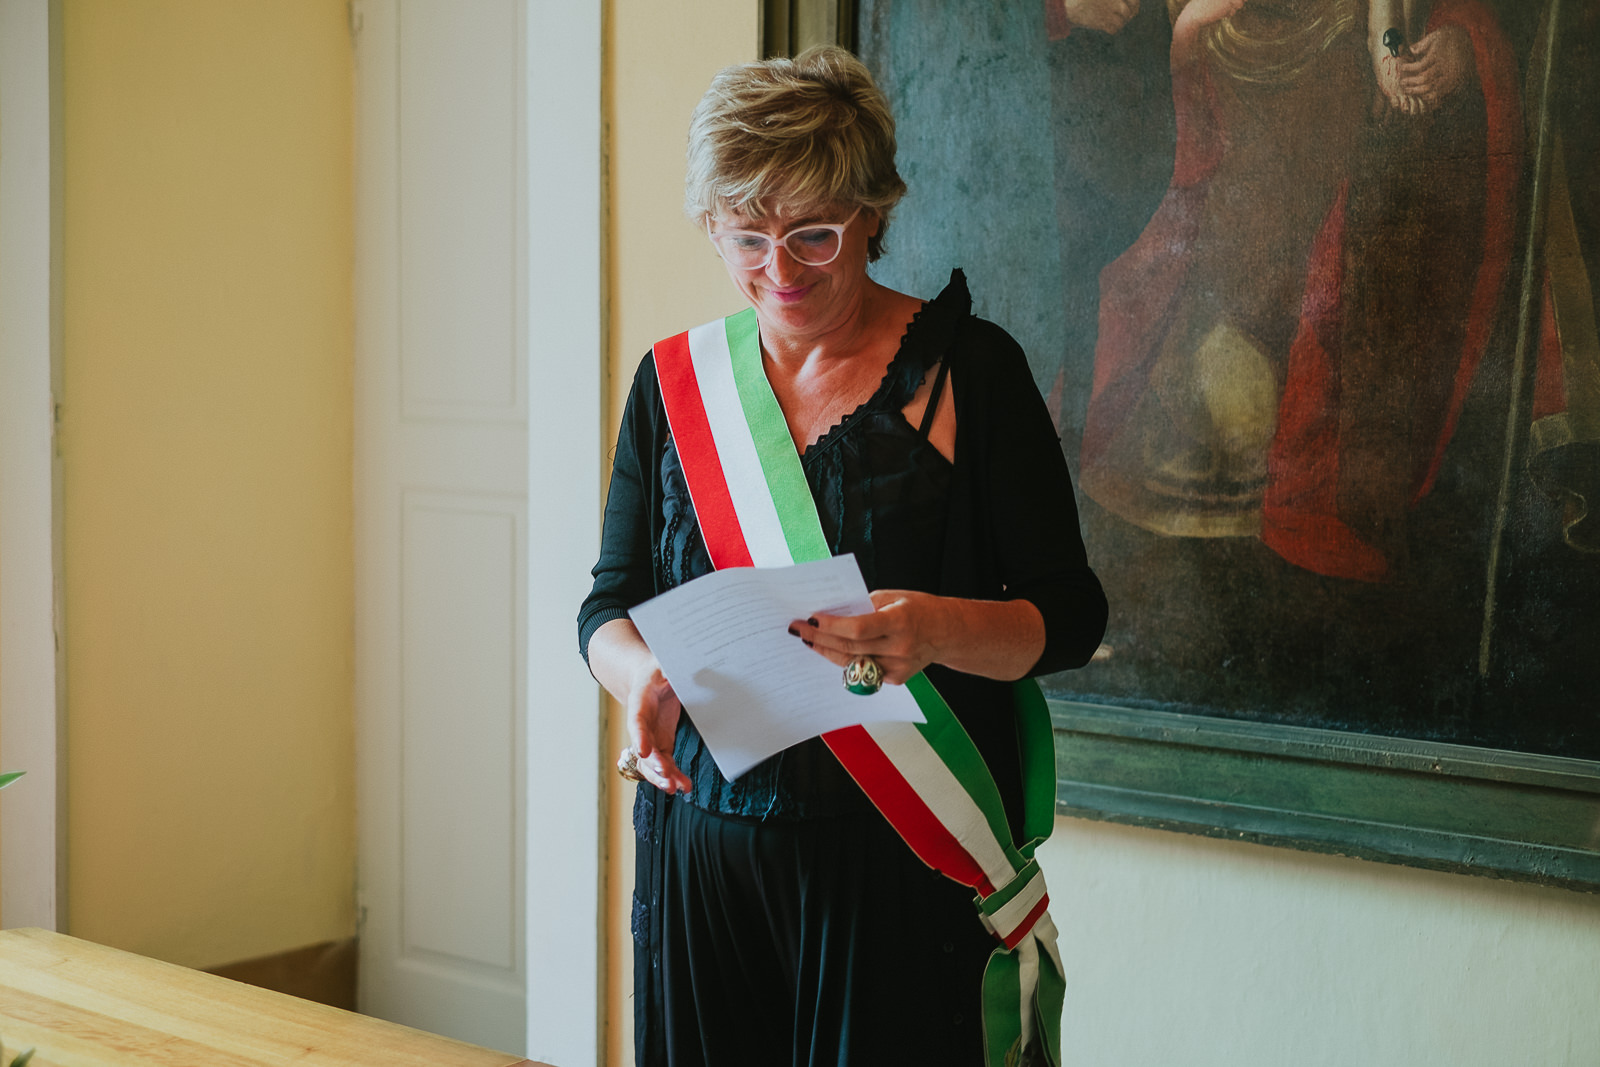 Mayor of Pontremoli Lucia Baracchini